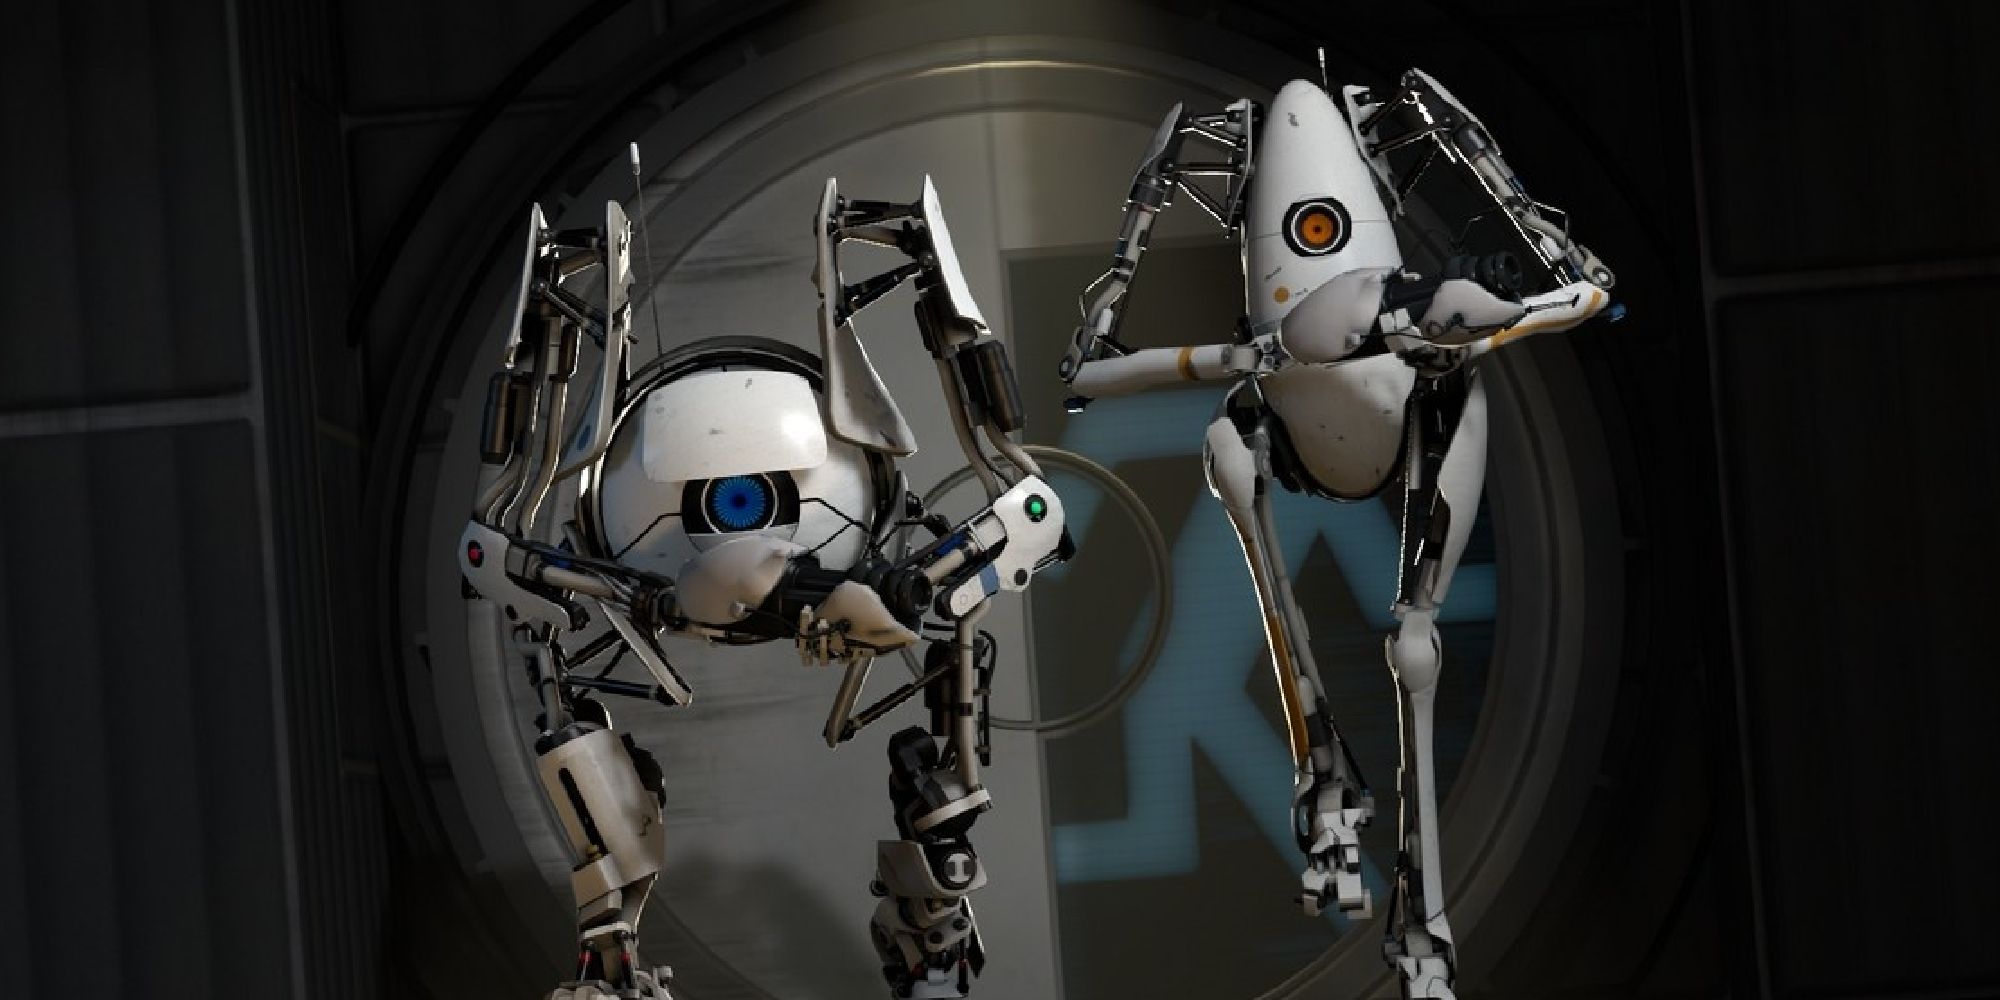 Atlas and P-body in a cutscene from Portal 2